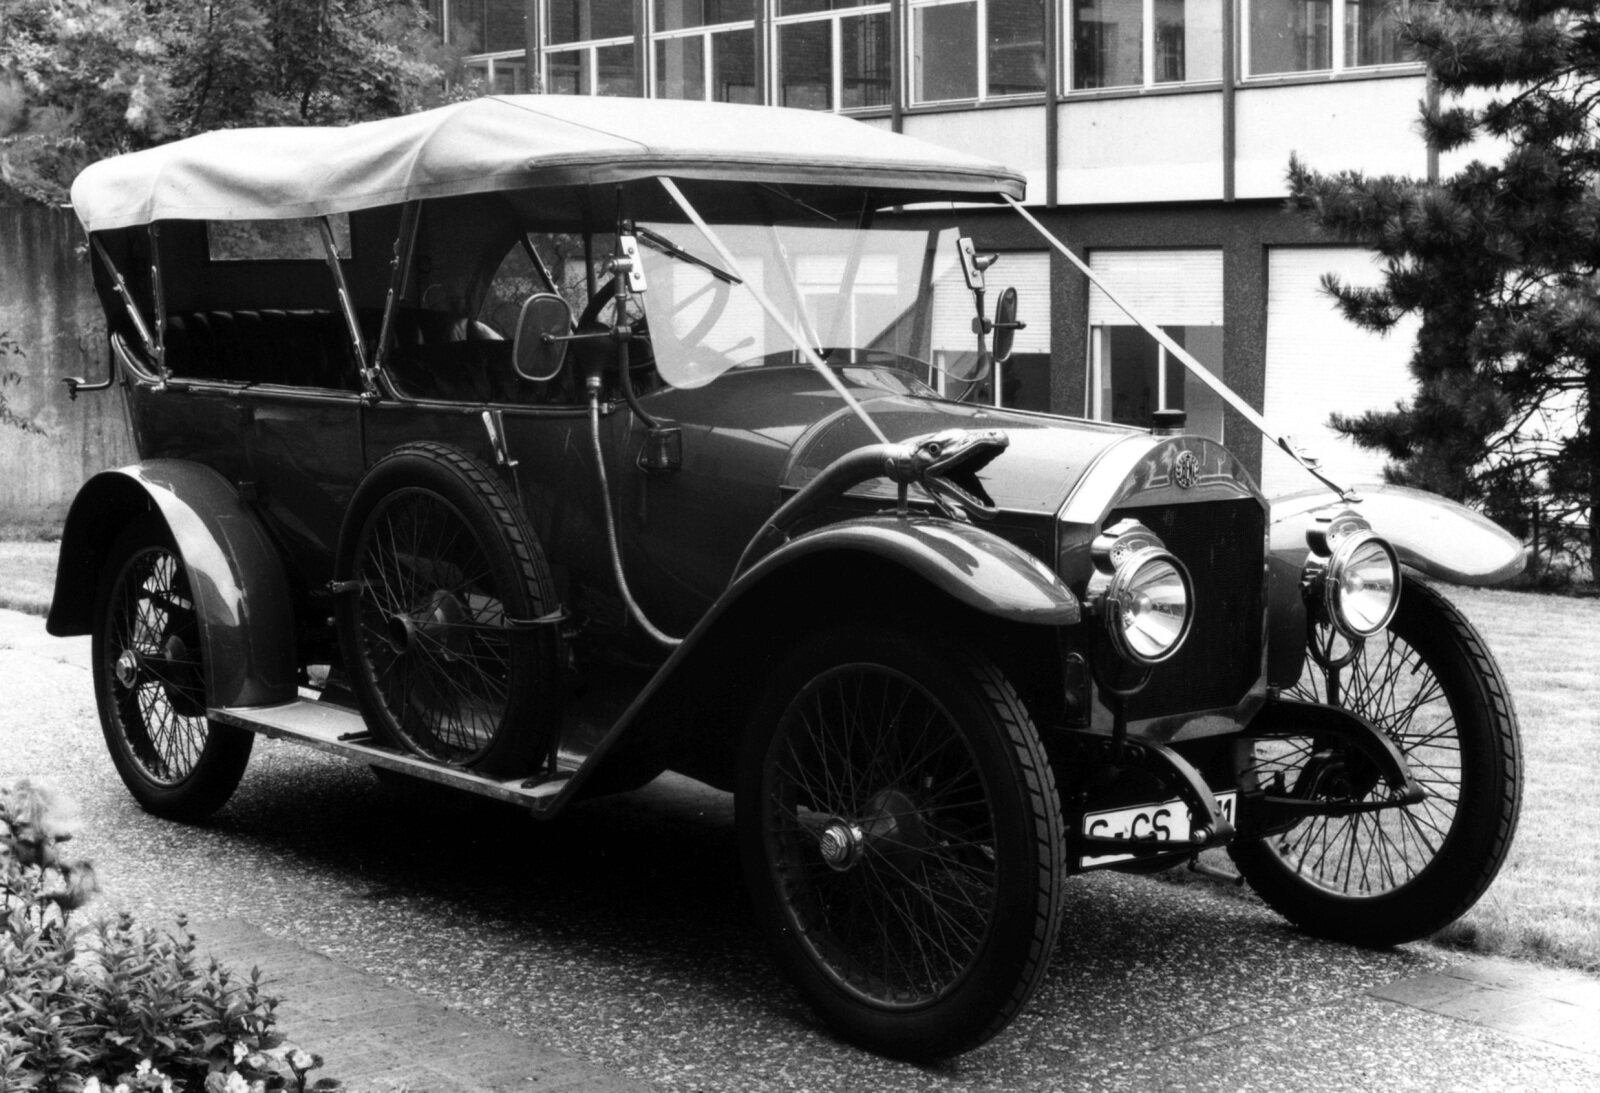 PKW1071 6/14 hp - 200 hp Benz sports car, 1908 - 1922